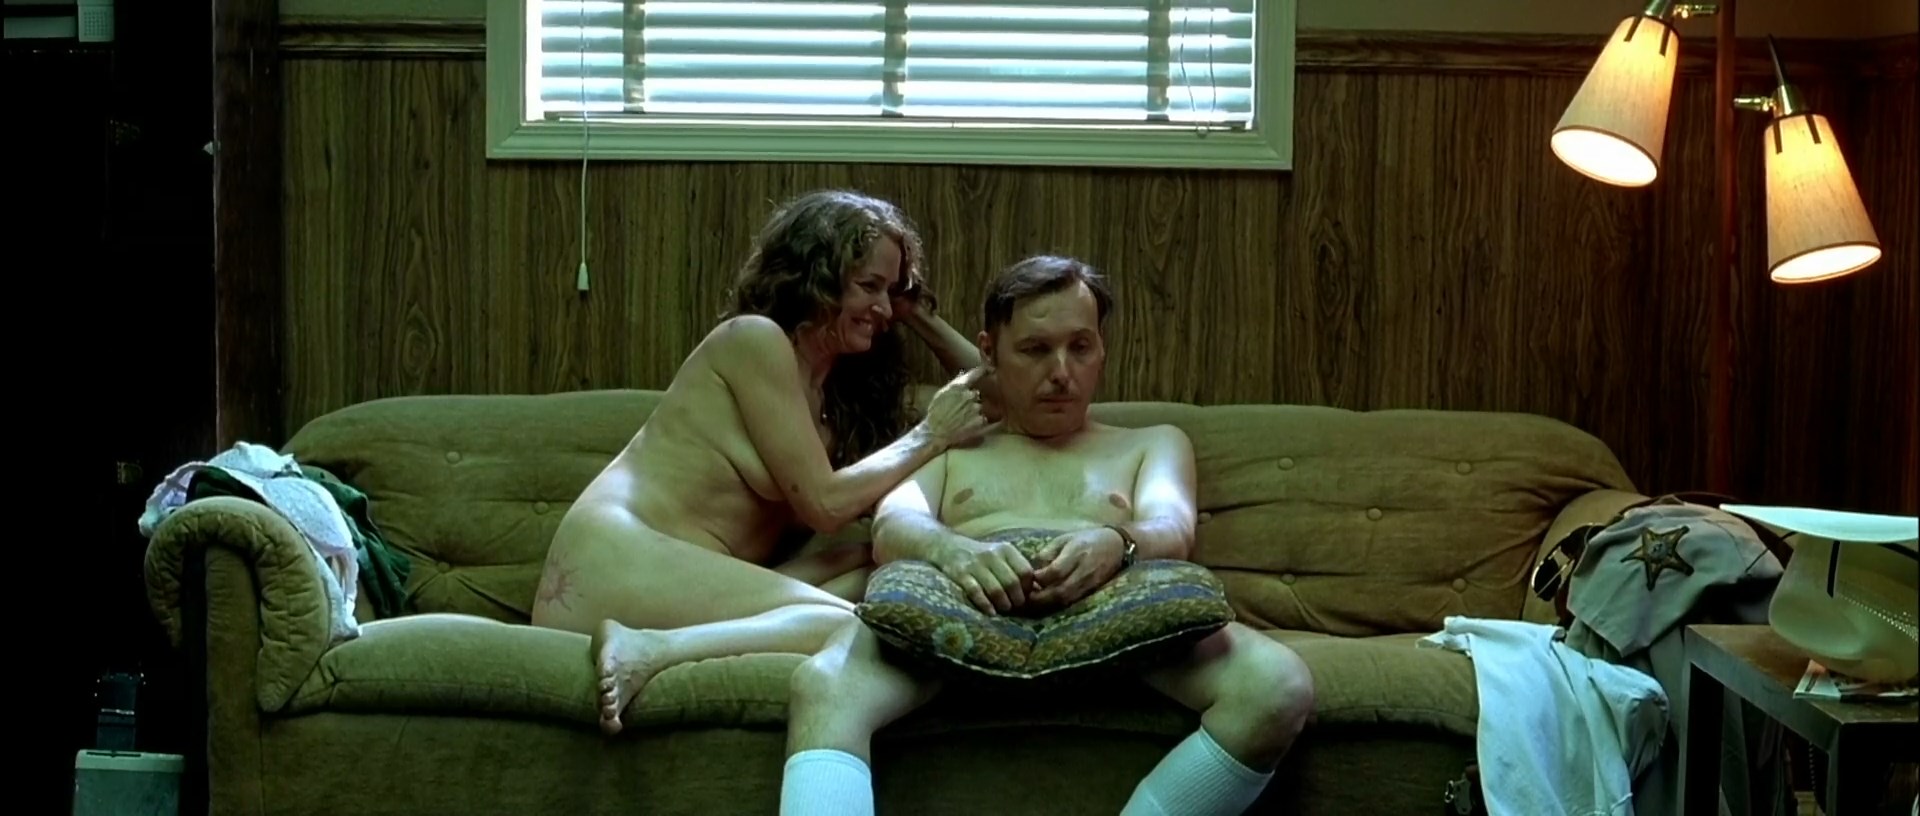 Nude Video Celebs January Jones Sexy Melissa Leo Nude The Three